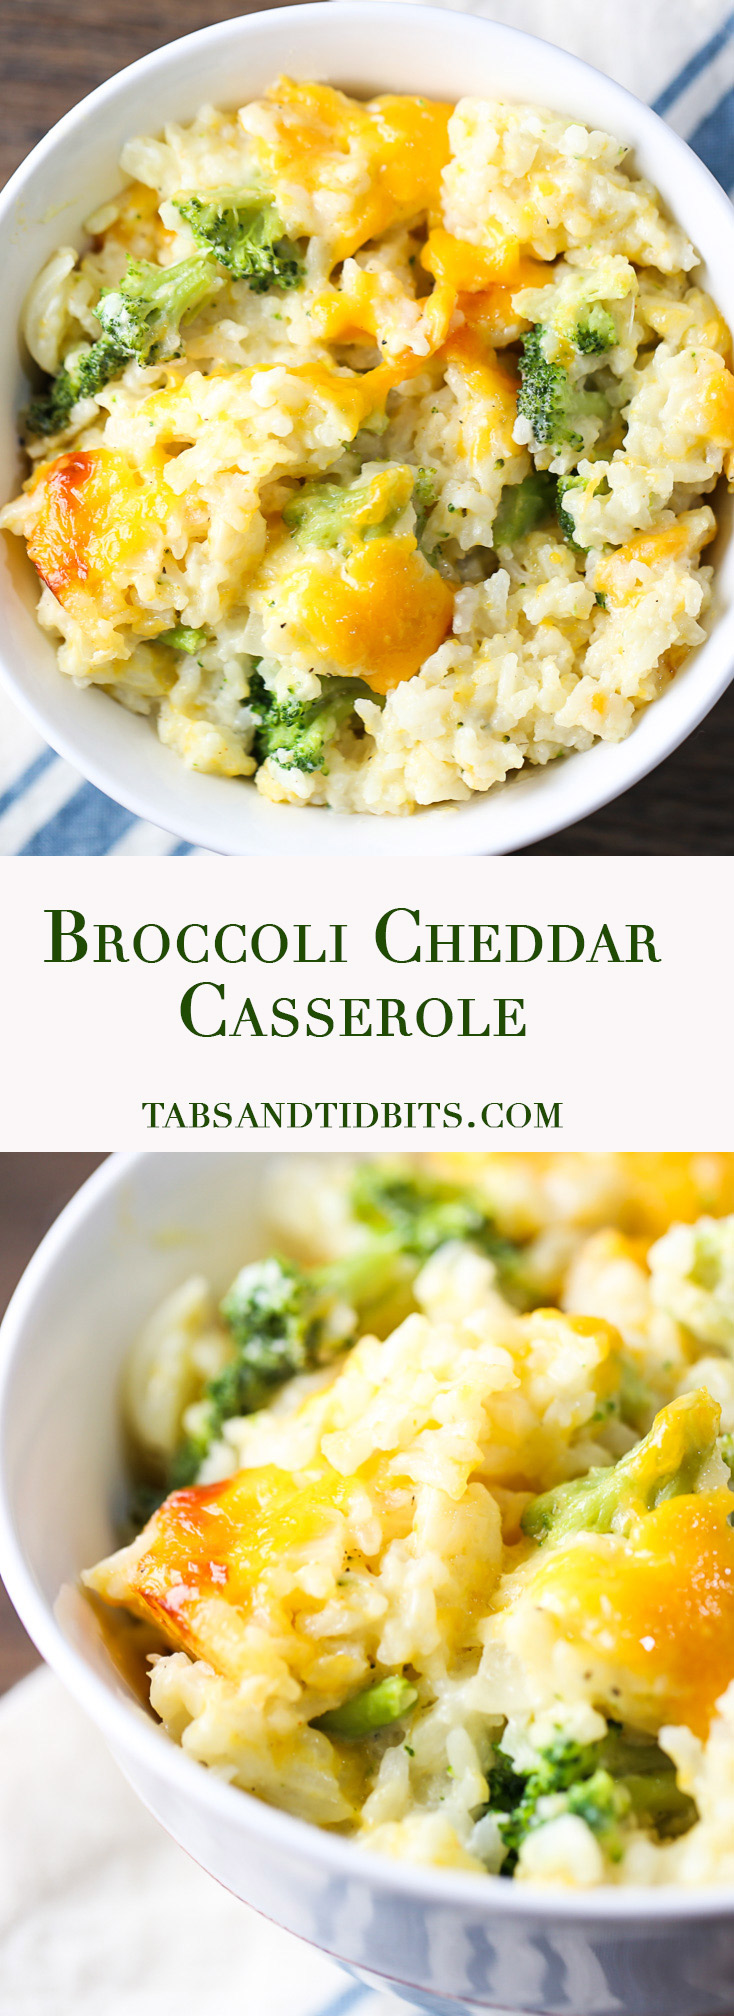 Broccoli Cheddar Casserole - Broccoli Cheddar Casserole with no "condensed cream of" canned soups, just cheesy, creamy goodness!